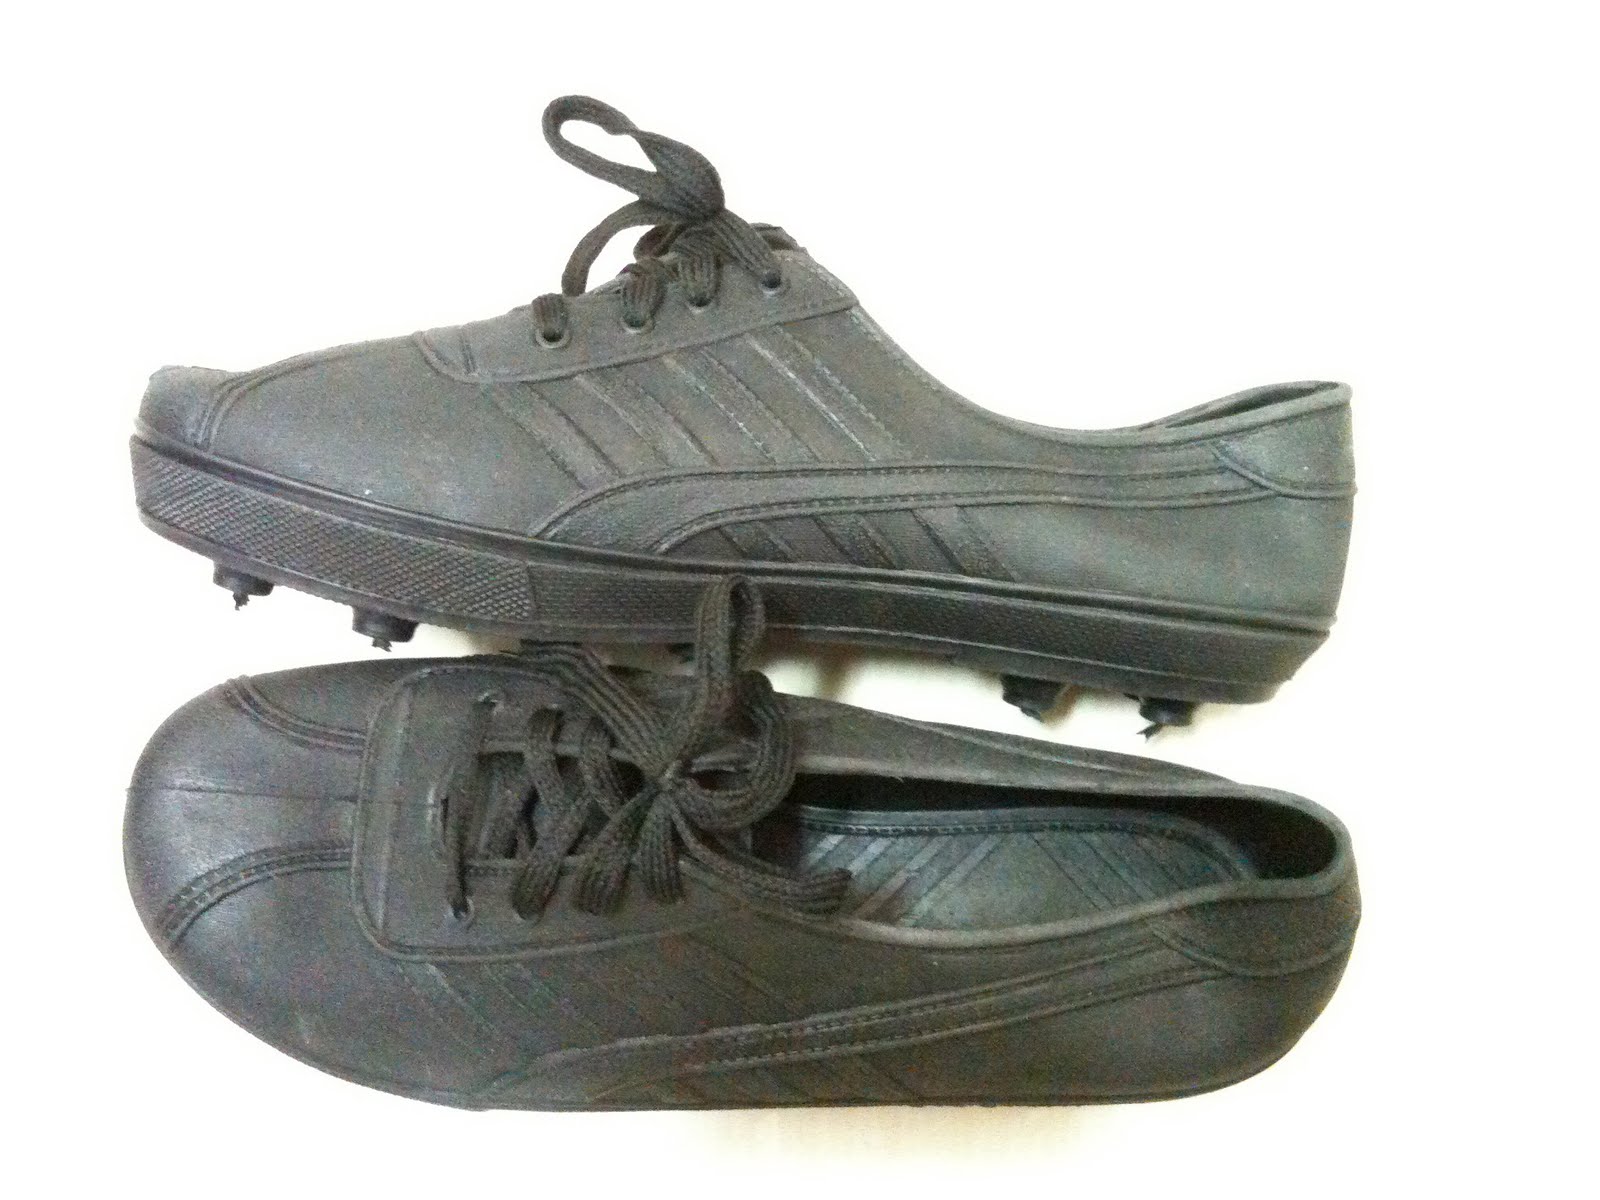 adidas kampung rubber shoes